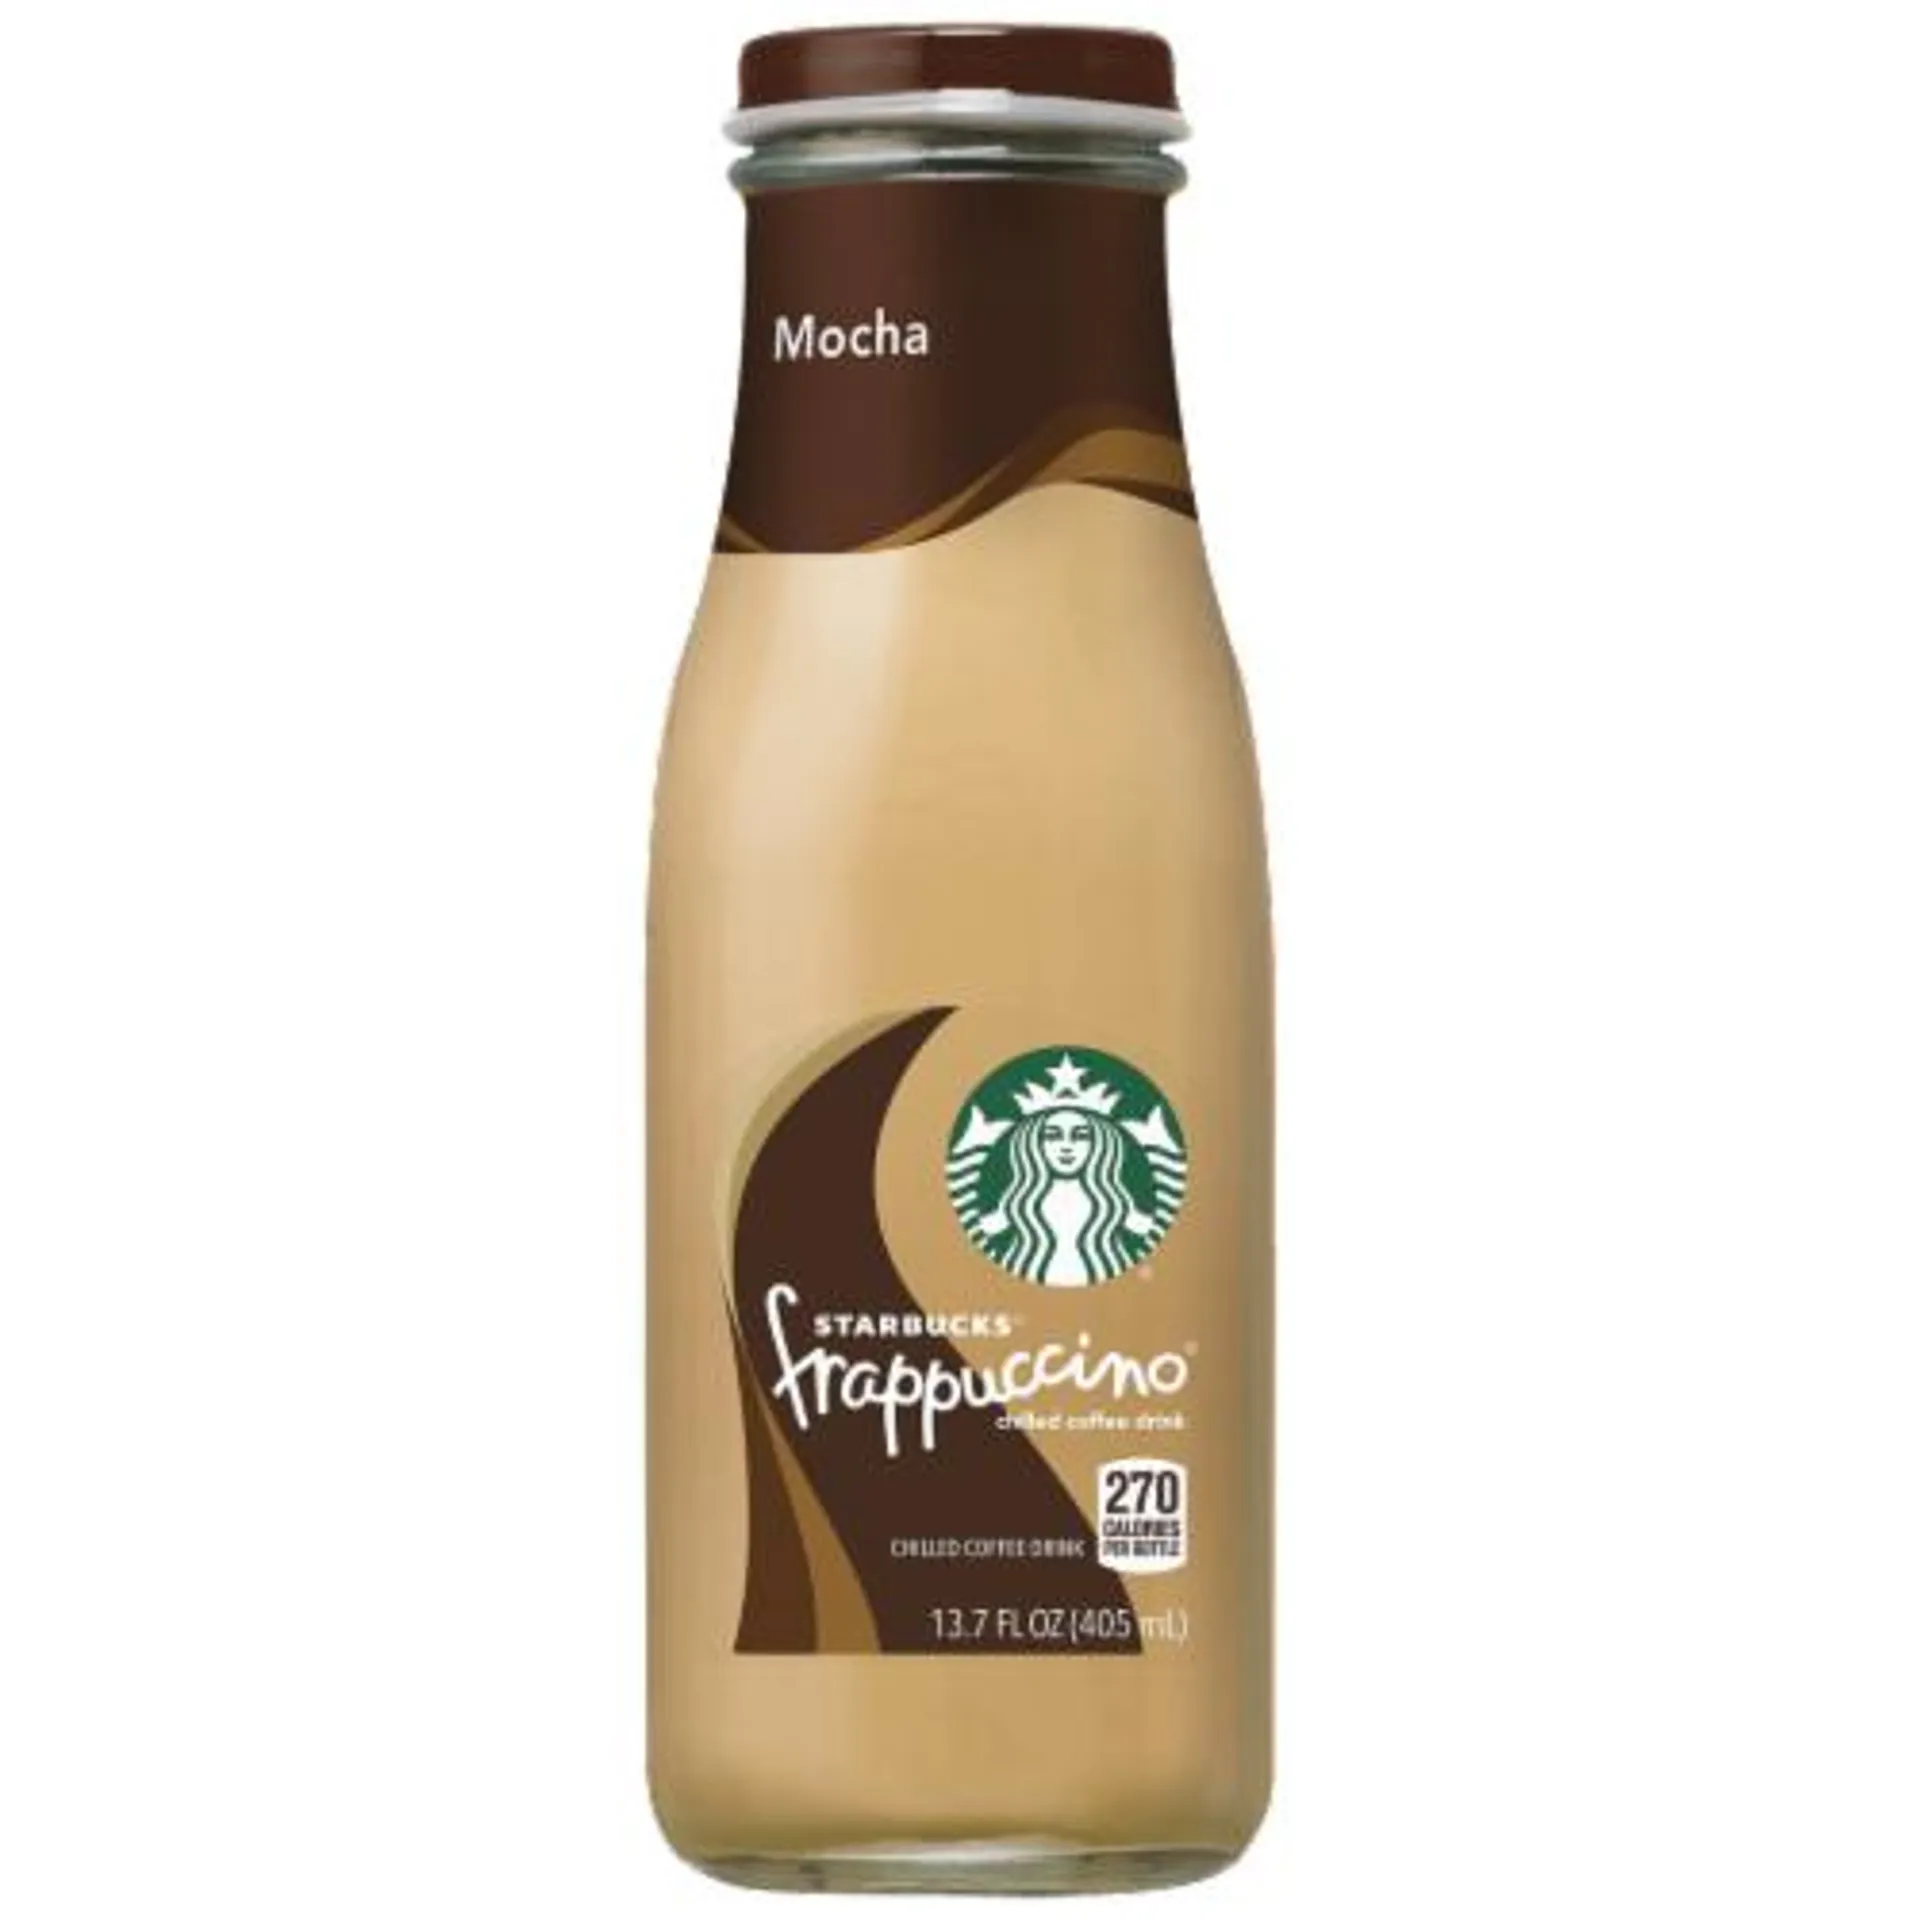 Starbucks Frappuccino Mocha Iced Coffee Drink